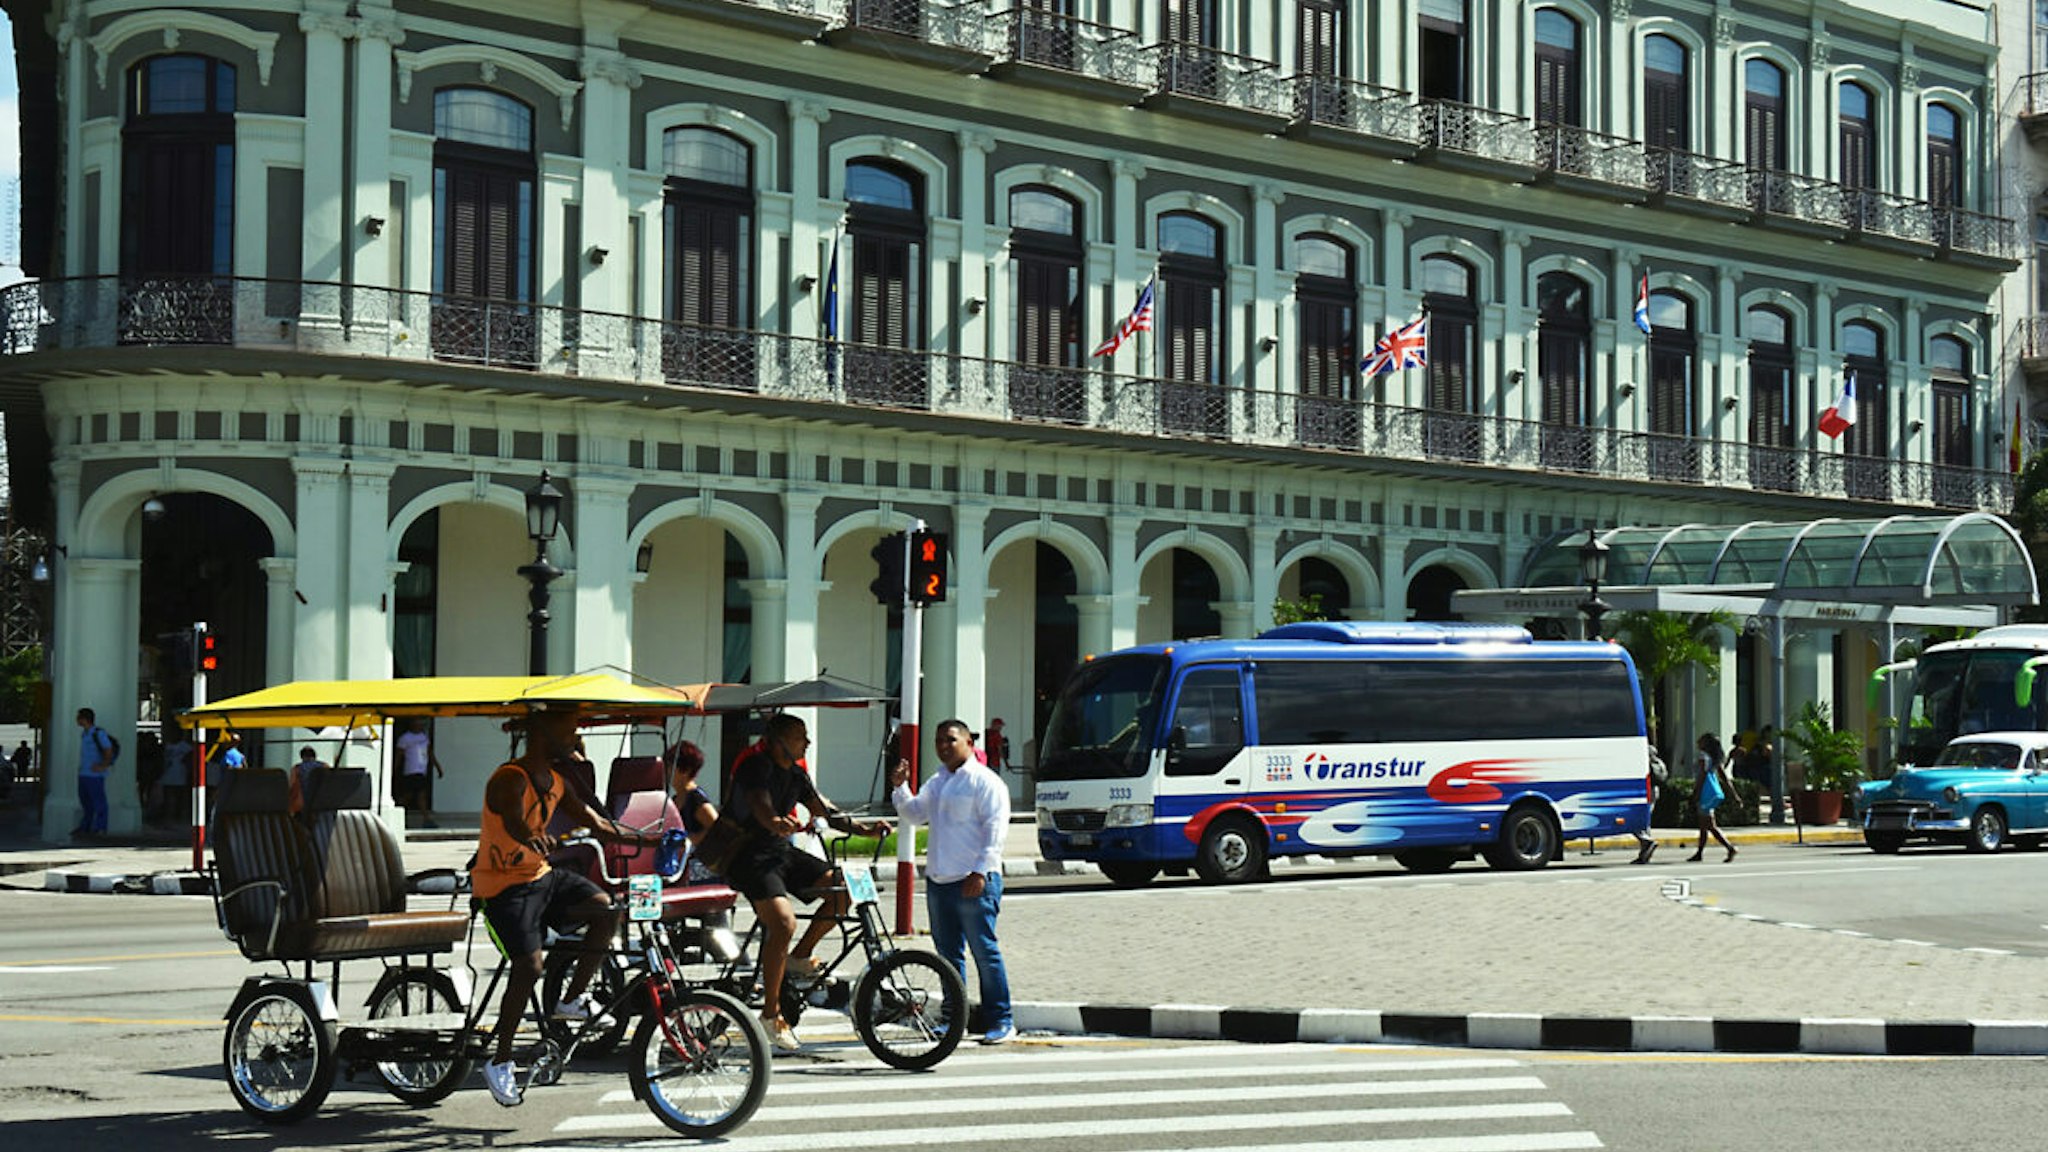 View of the Saratoga Hotel on November 11, 2019 in Havana